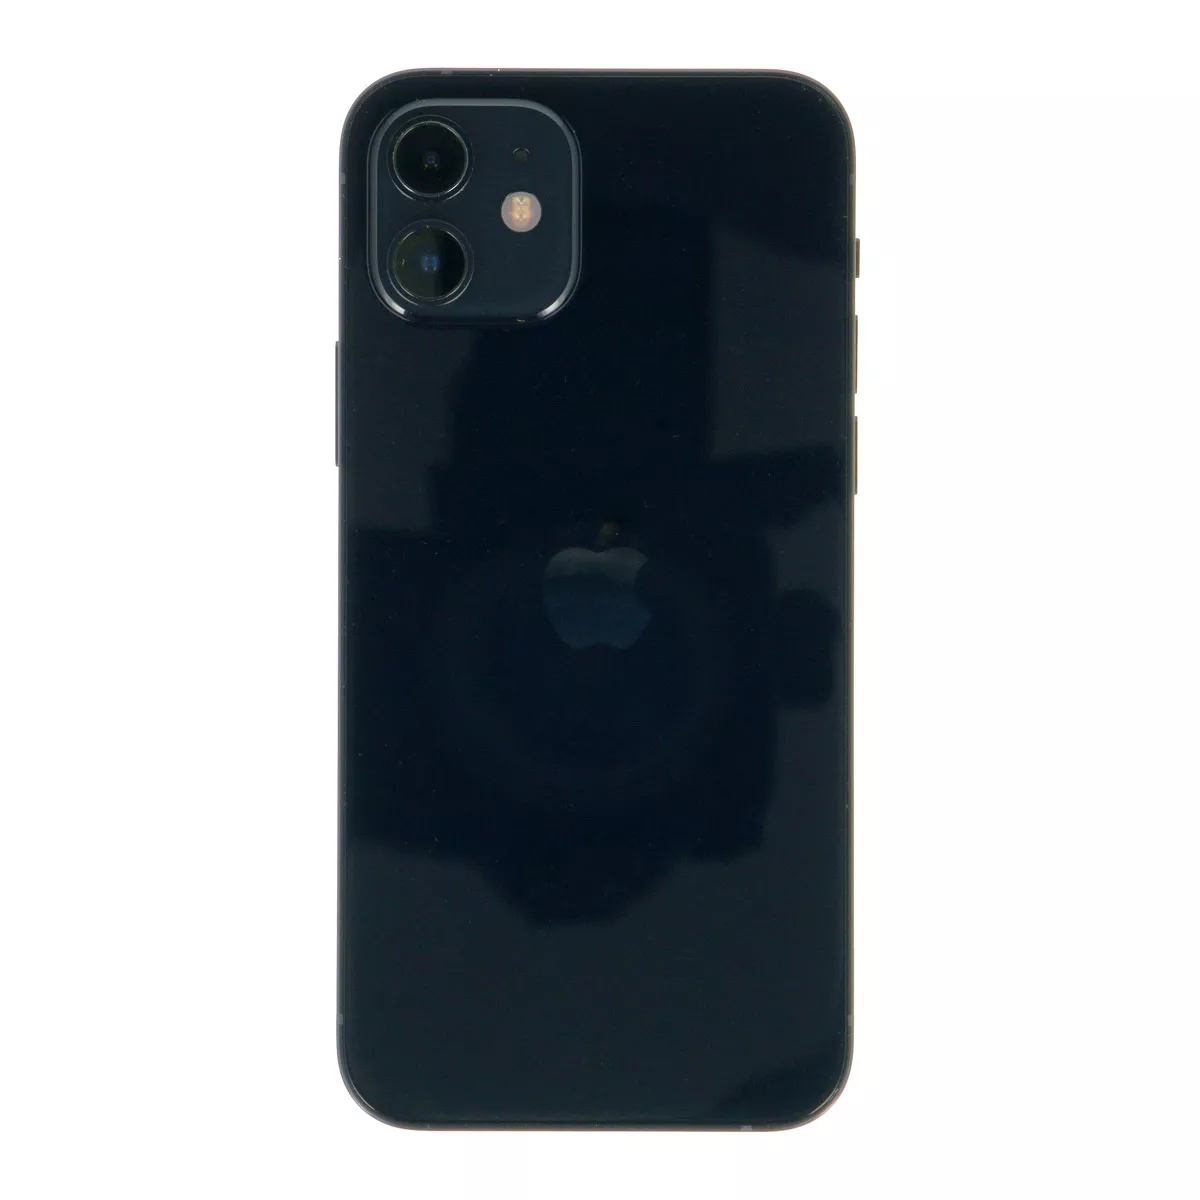 Apple iPhone 12 64 GB Black A